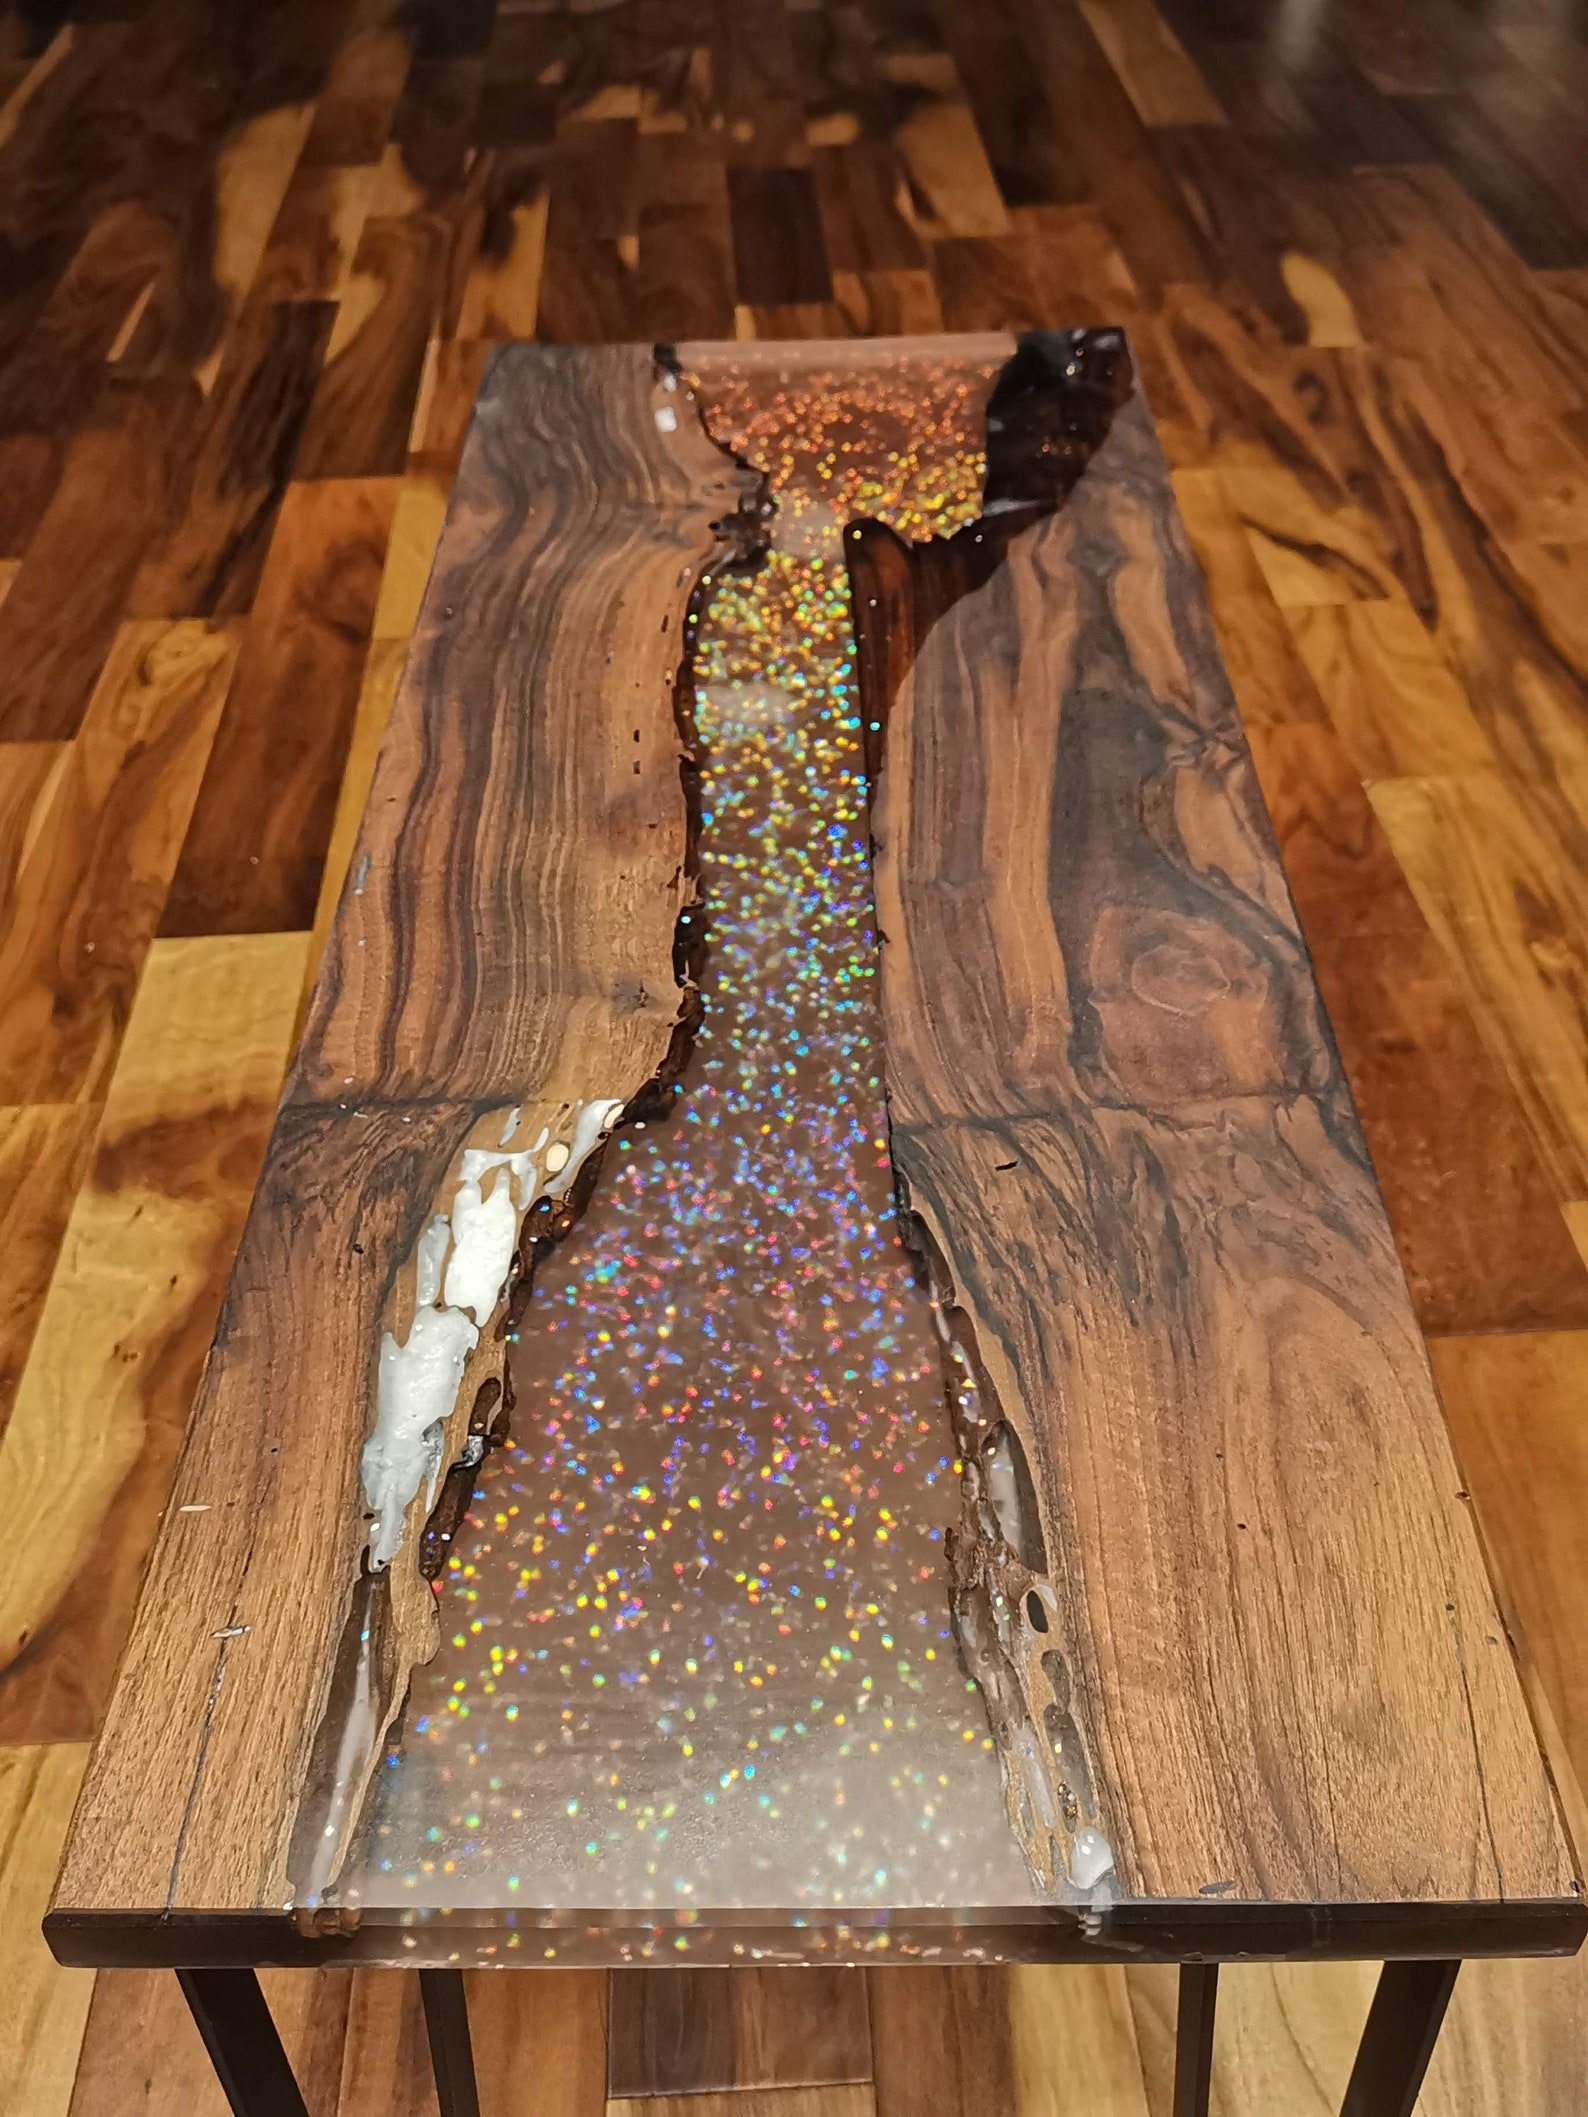 Black Walnut epoxy resin coffee table with Rainbow | Etsy